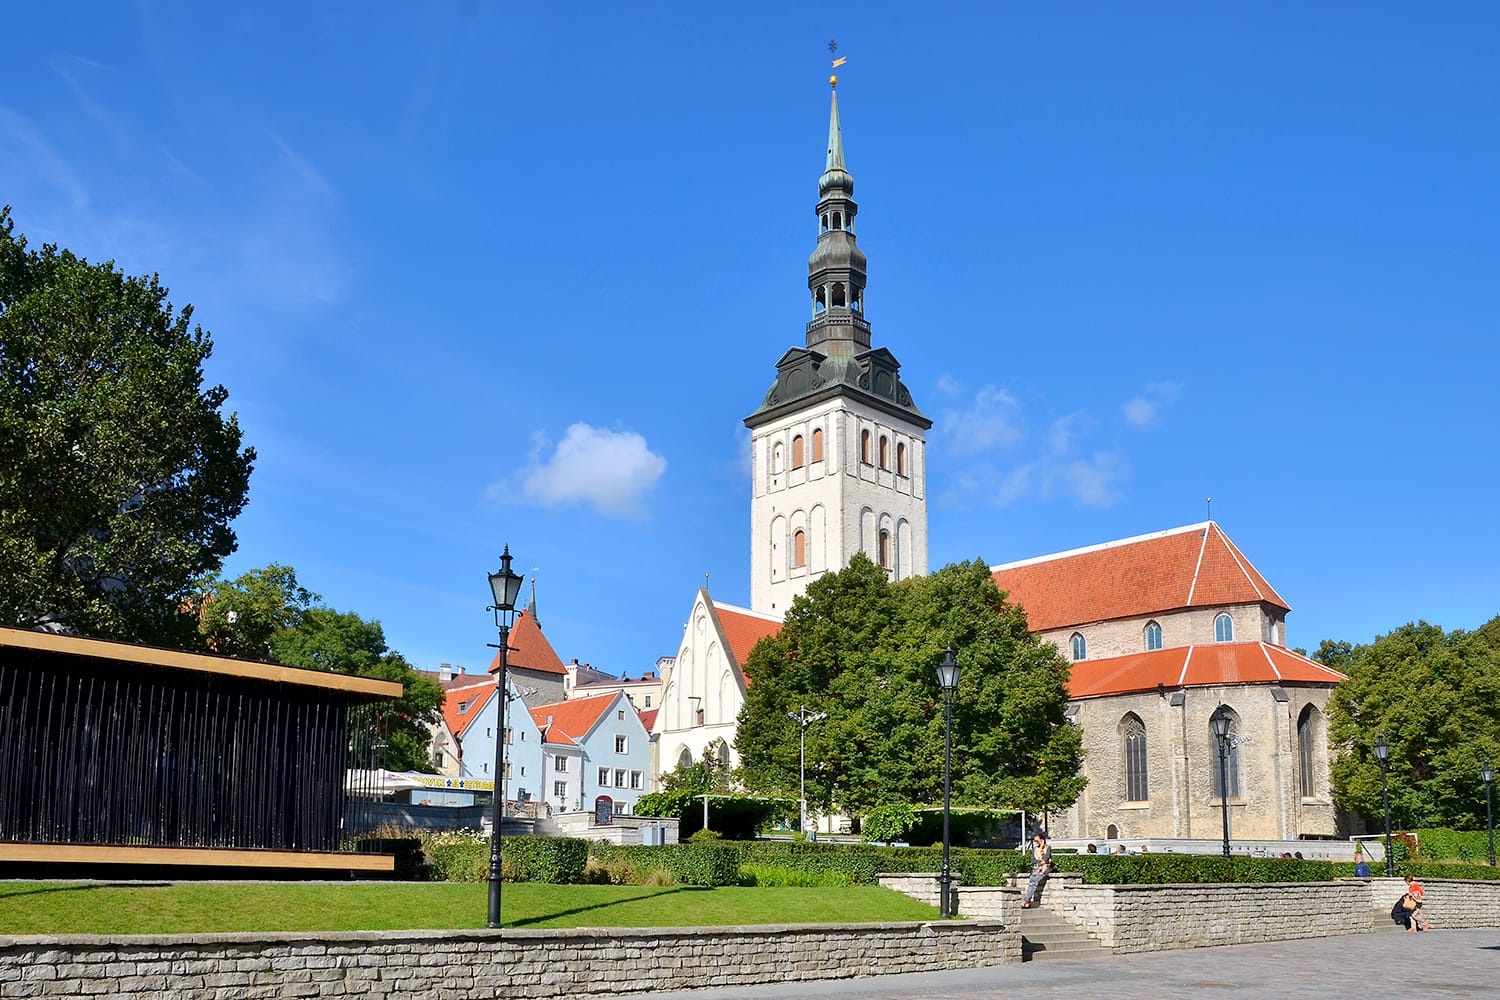 St. Nicholas Church (Niguliste kirik) in old town of Tallinn, Estonia at sunny day